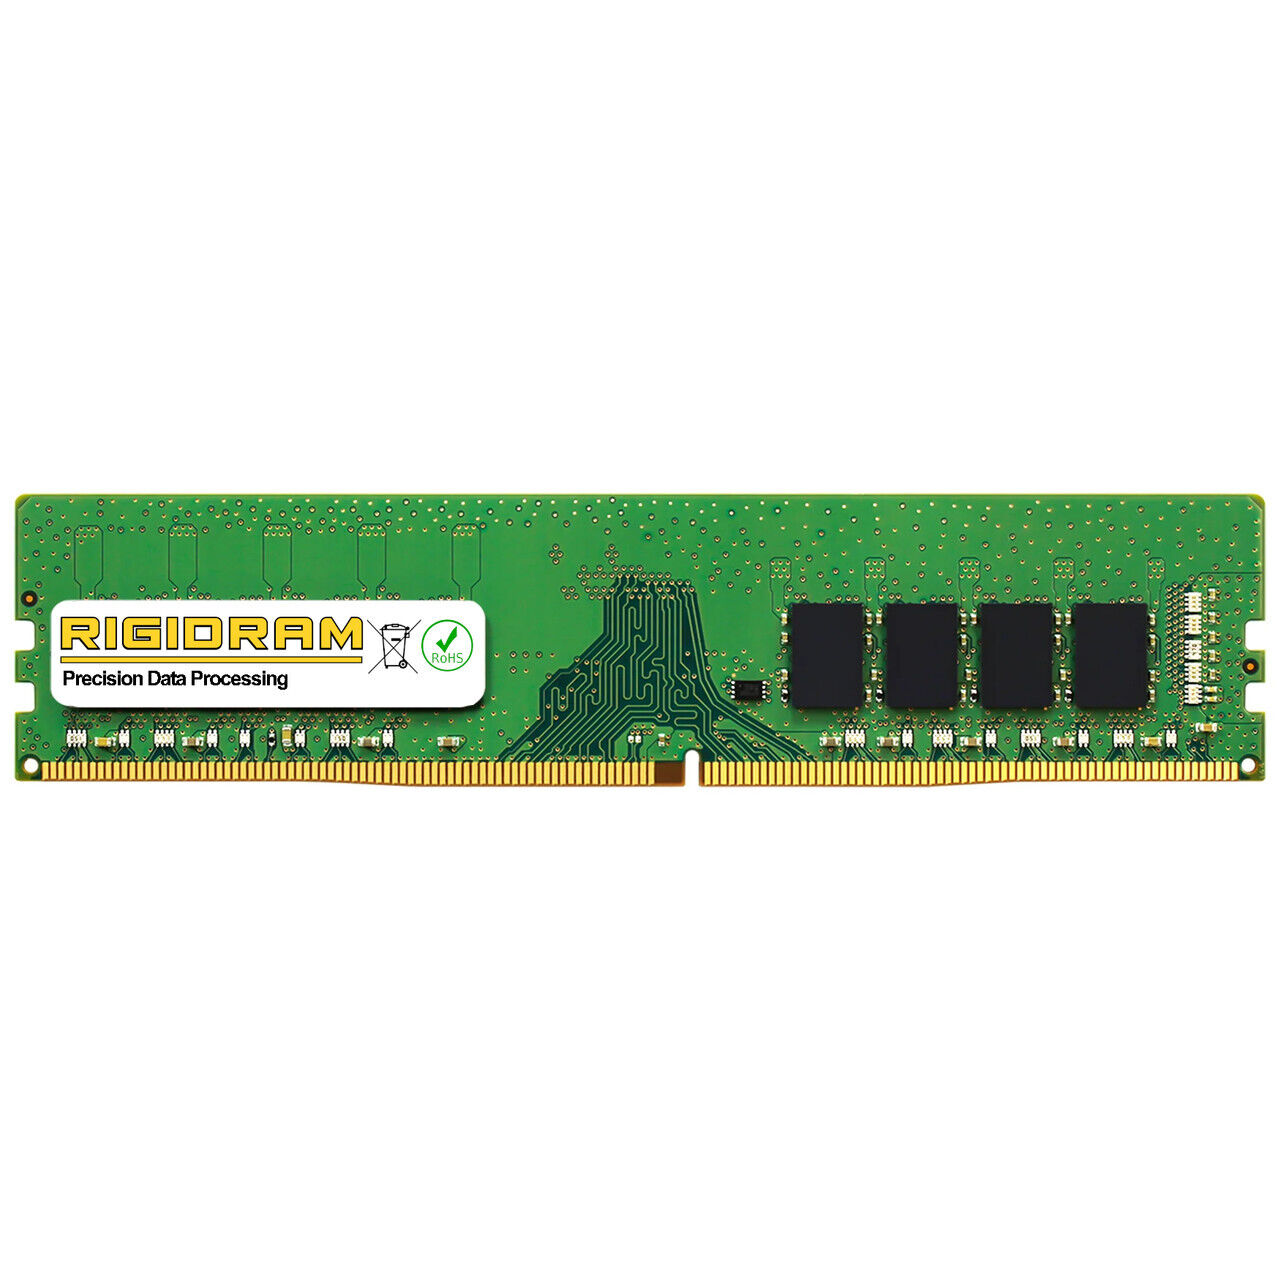 16GB RAM HP EliteDesk 705 G5 DDR4 Memory RigidRAM Upgrades